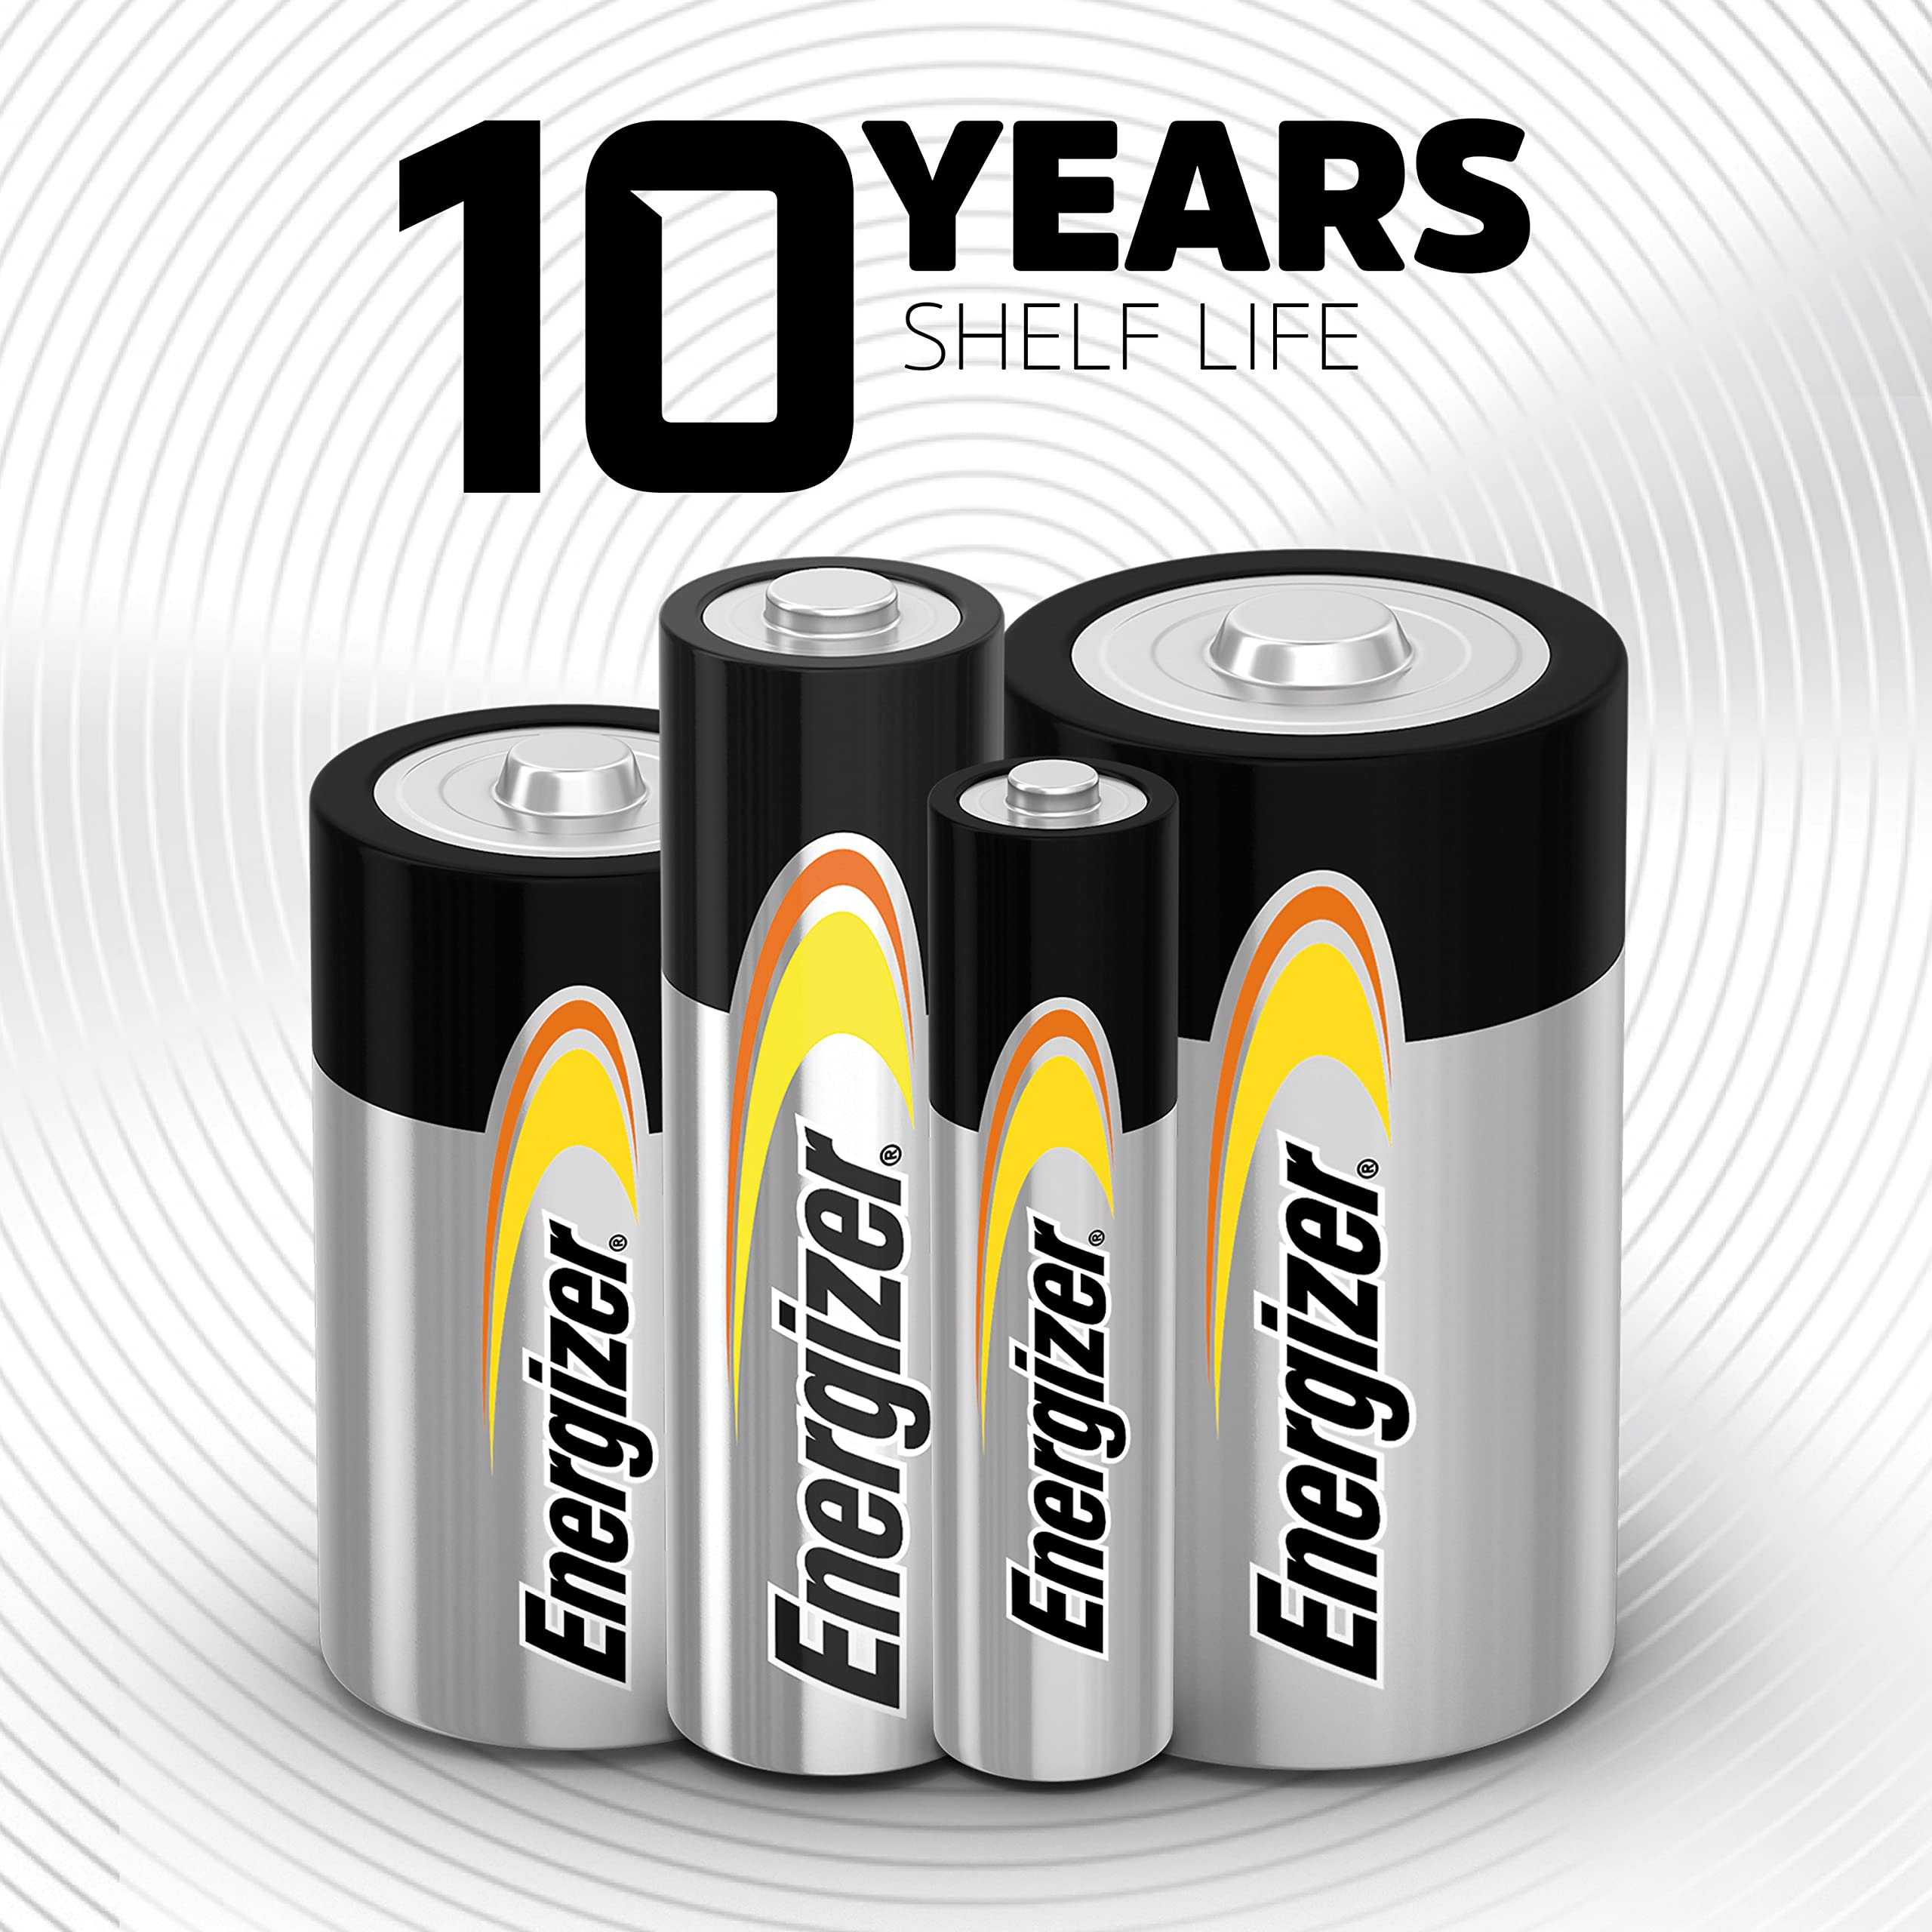 Energizer Alkaline Power D Batteries (12 Pack), Long-Lasting Alkaline Size D Batteries - Packaging May Vary